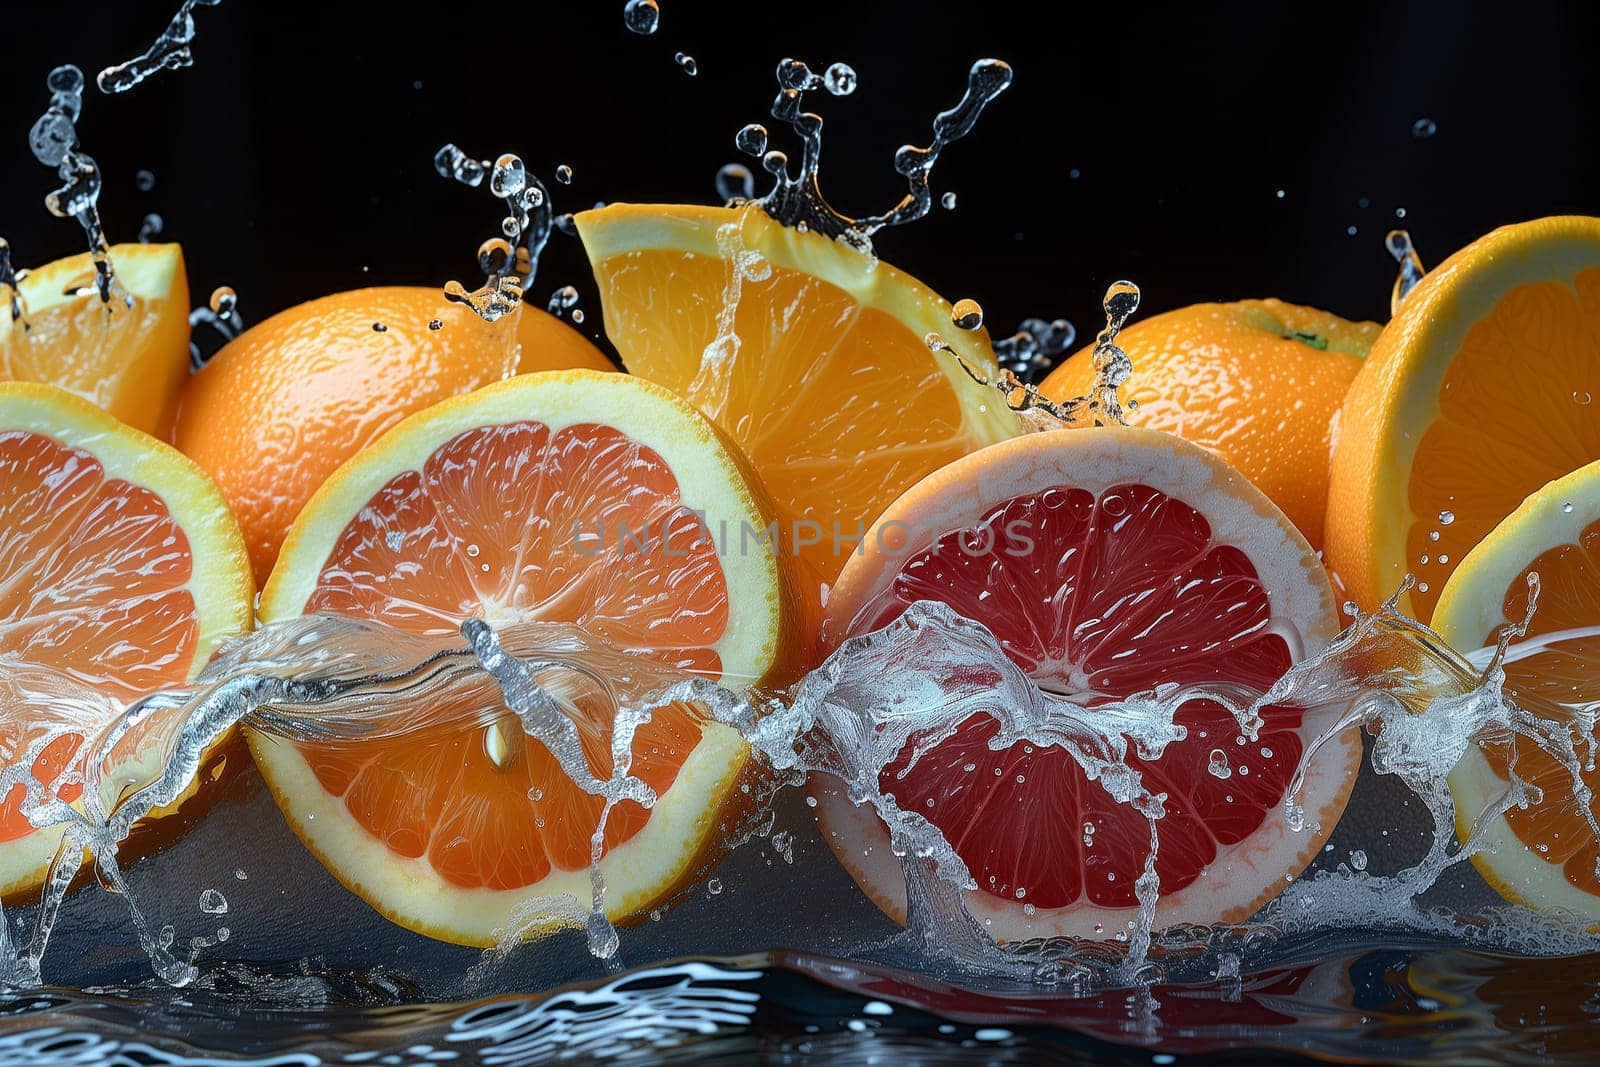 Citrus fruits like grapefruit, oranges, and lemons splashing in water by richwolf